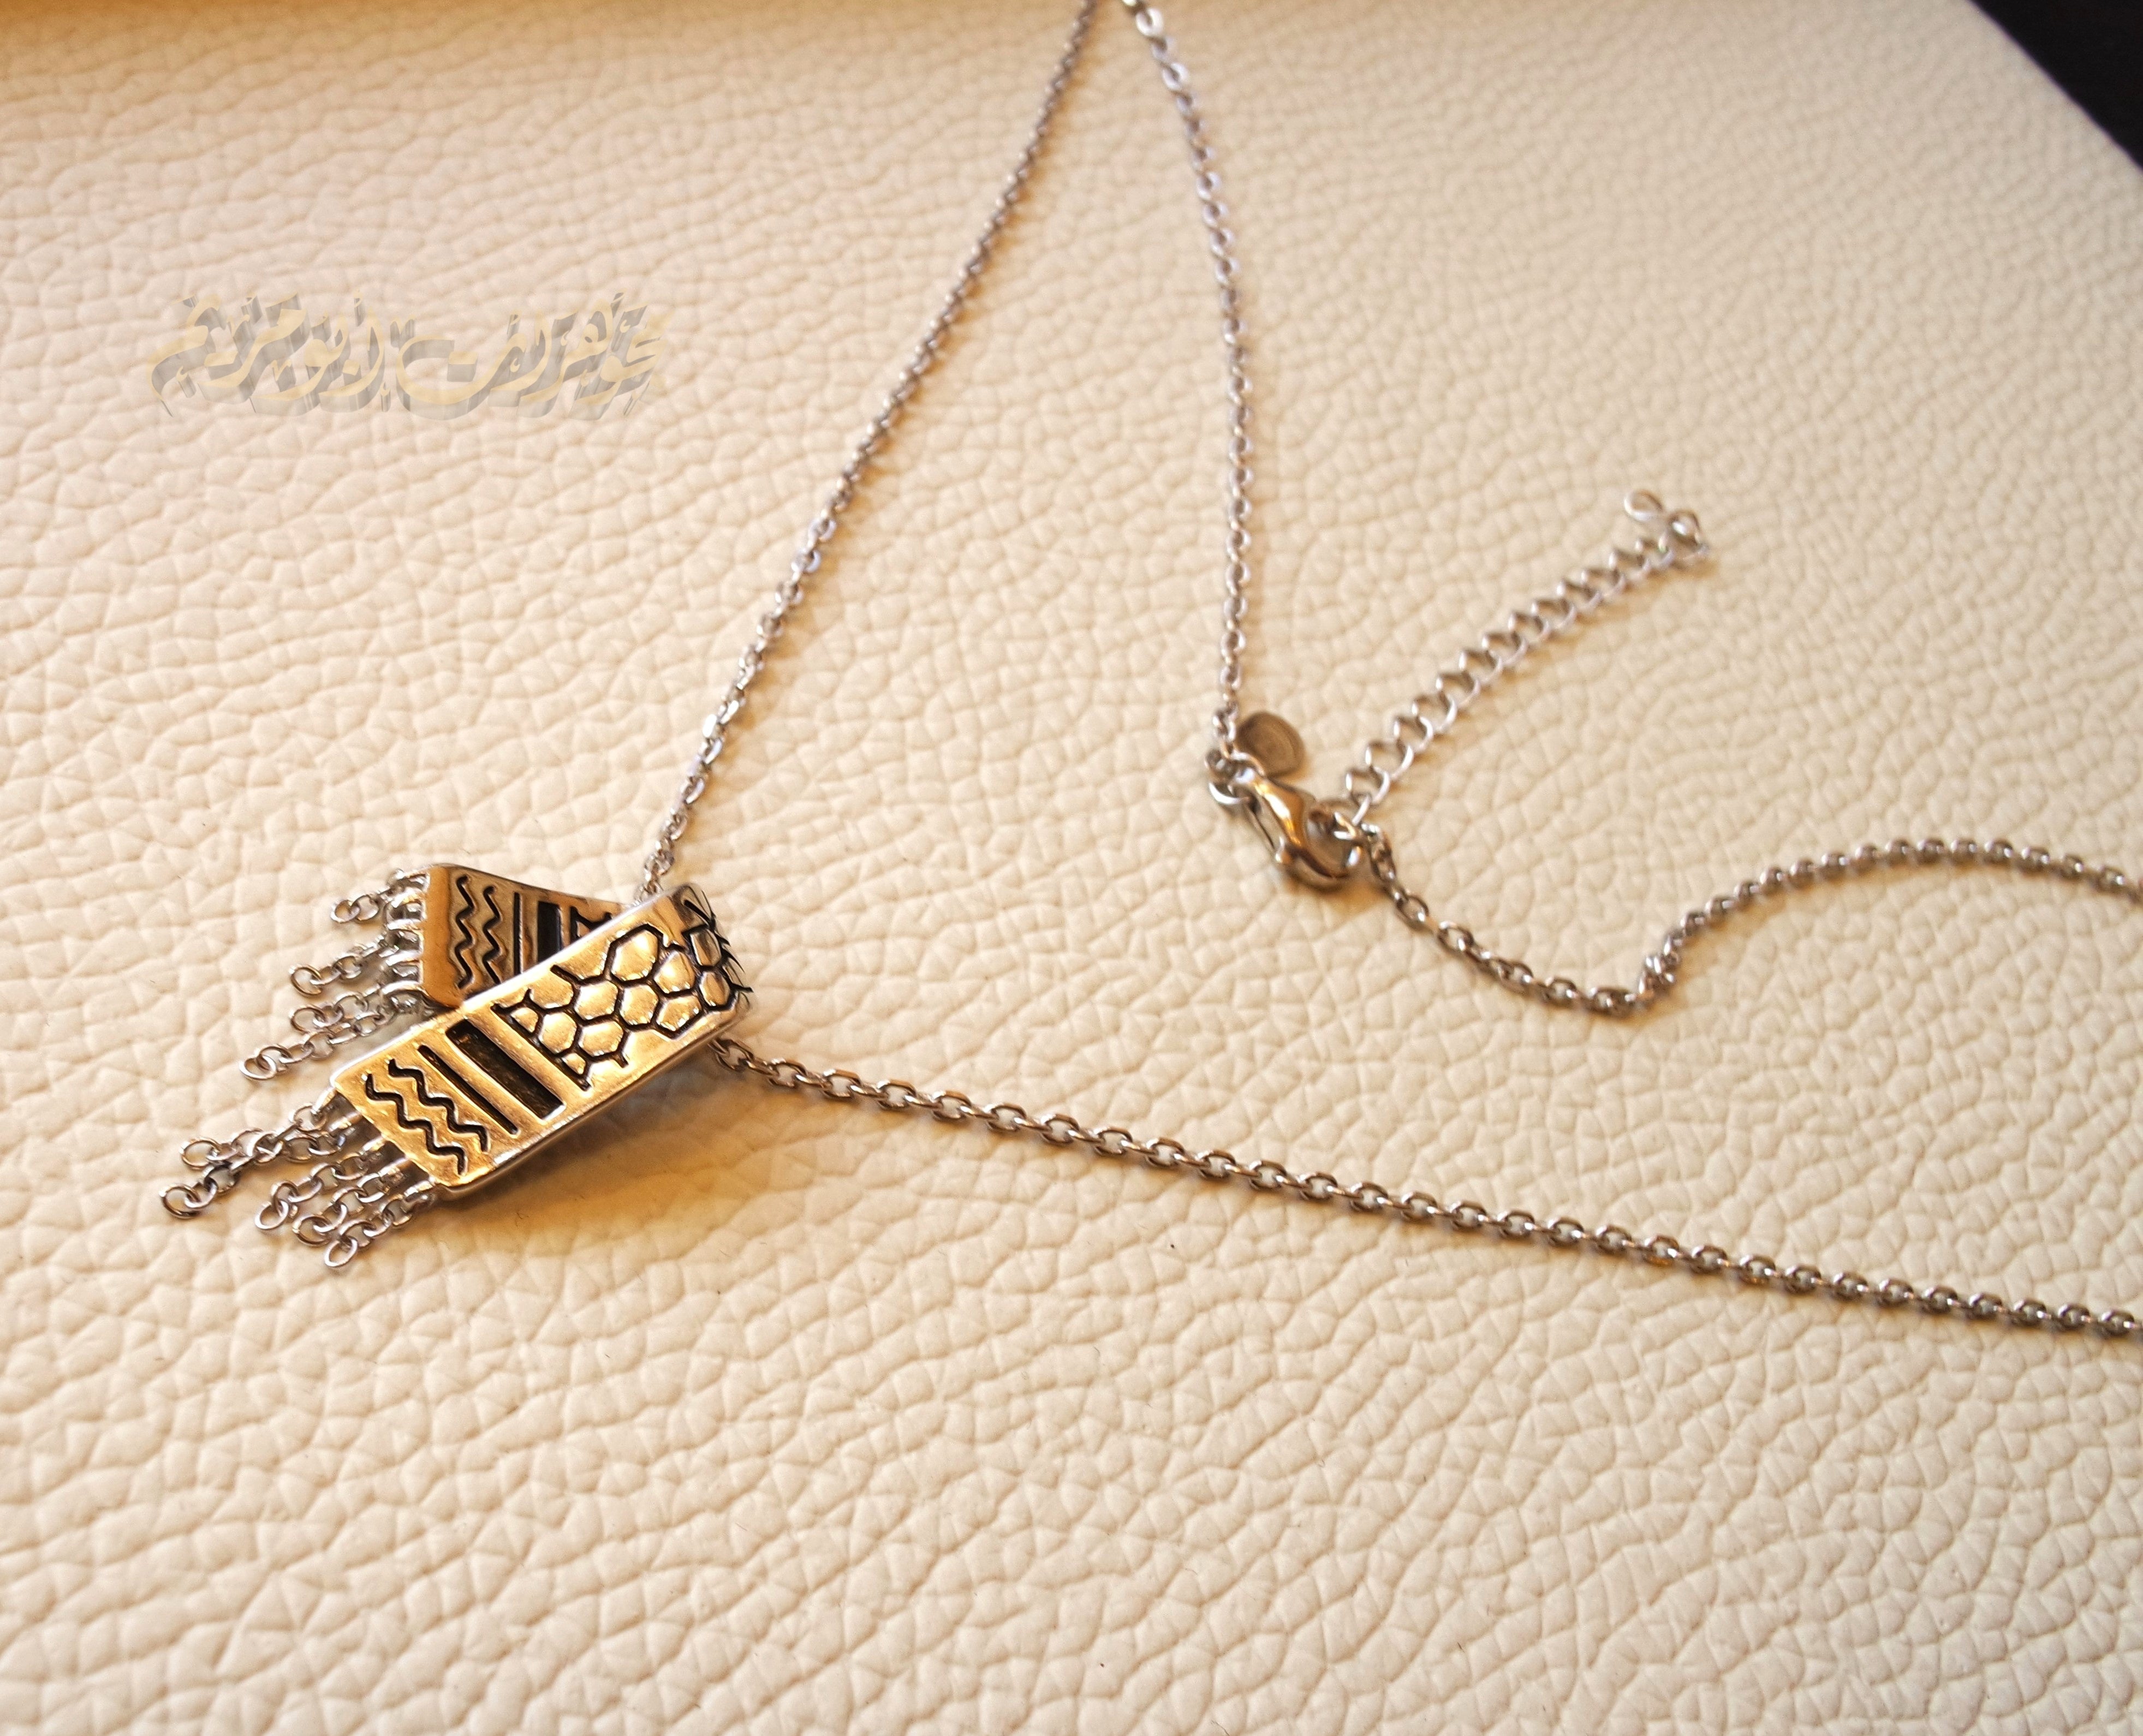 Palestine koufeyeh necklace sterling silver 925 high quality jewelry koufyeh Arabic fast shipping كوفيه خارطه فلسطين